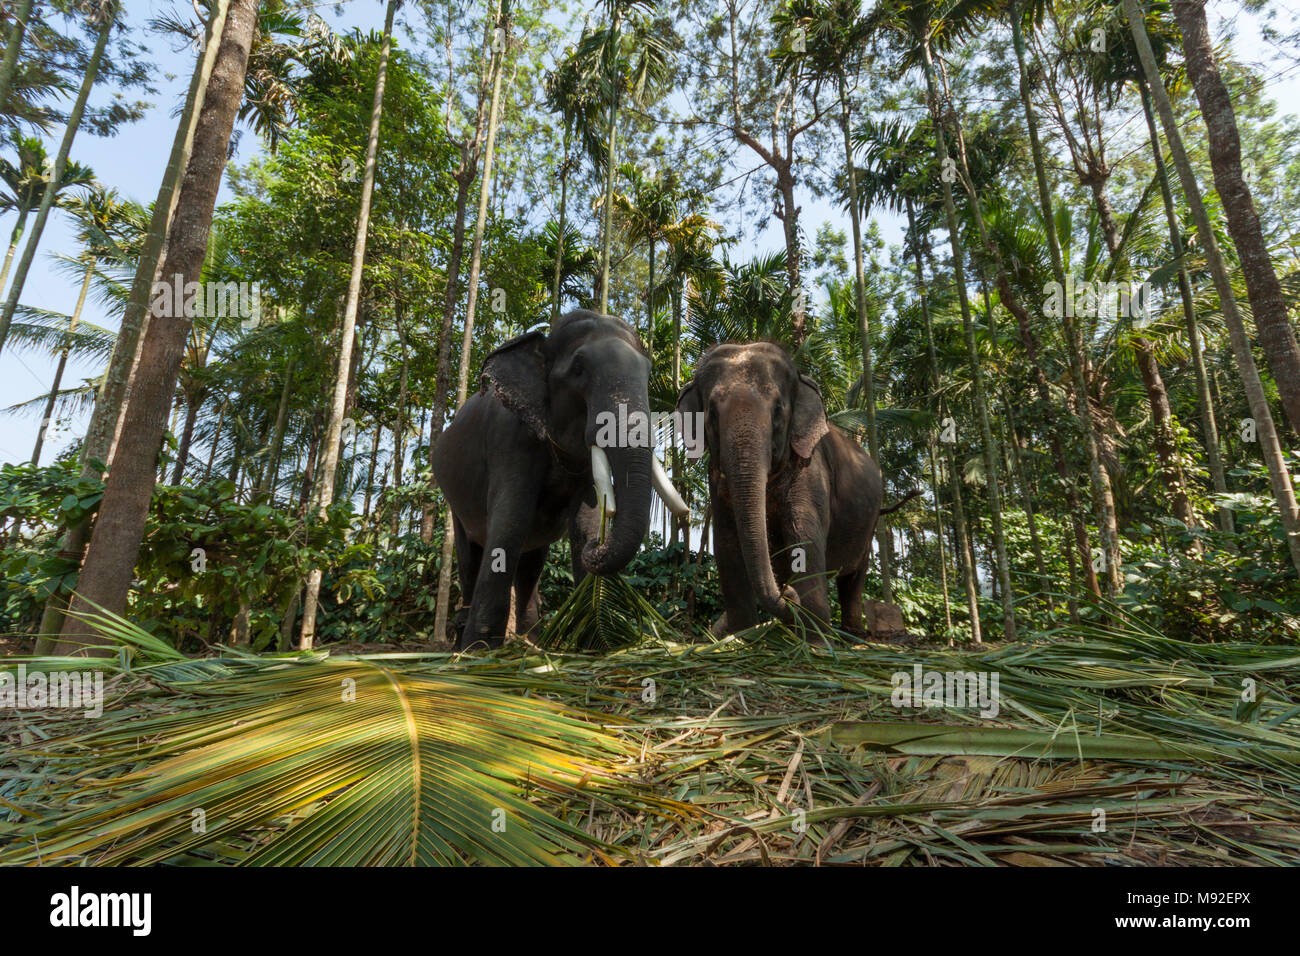 Two elephants at Thekkady, Periyar, Kerala, India used to take tourists on rides. Stock Photo